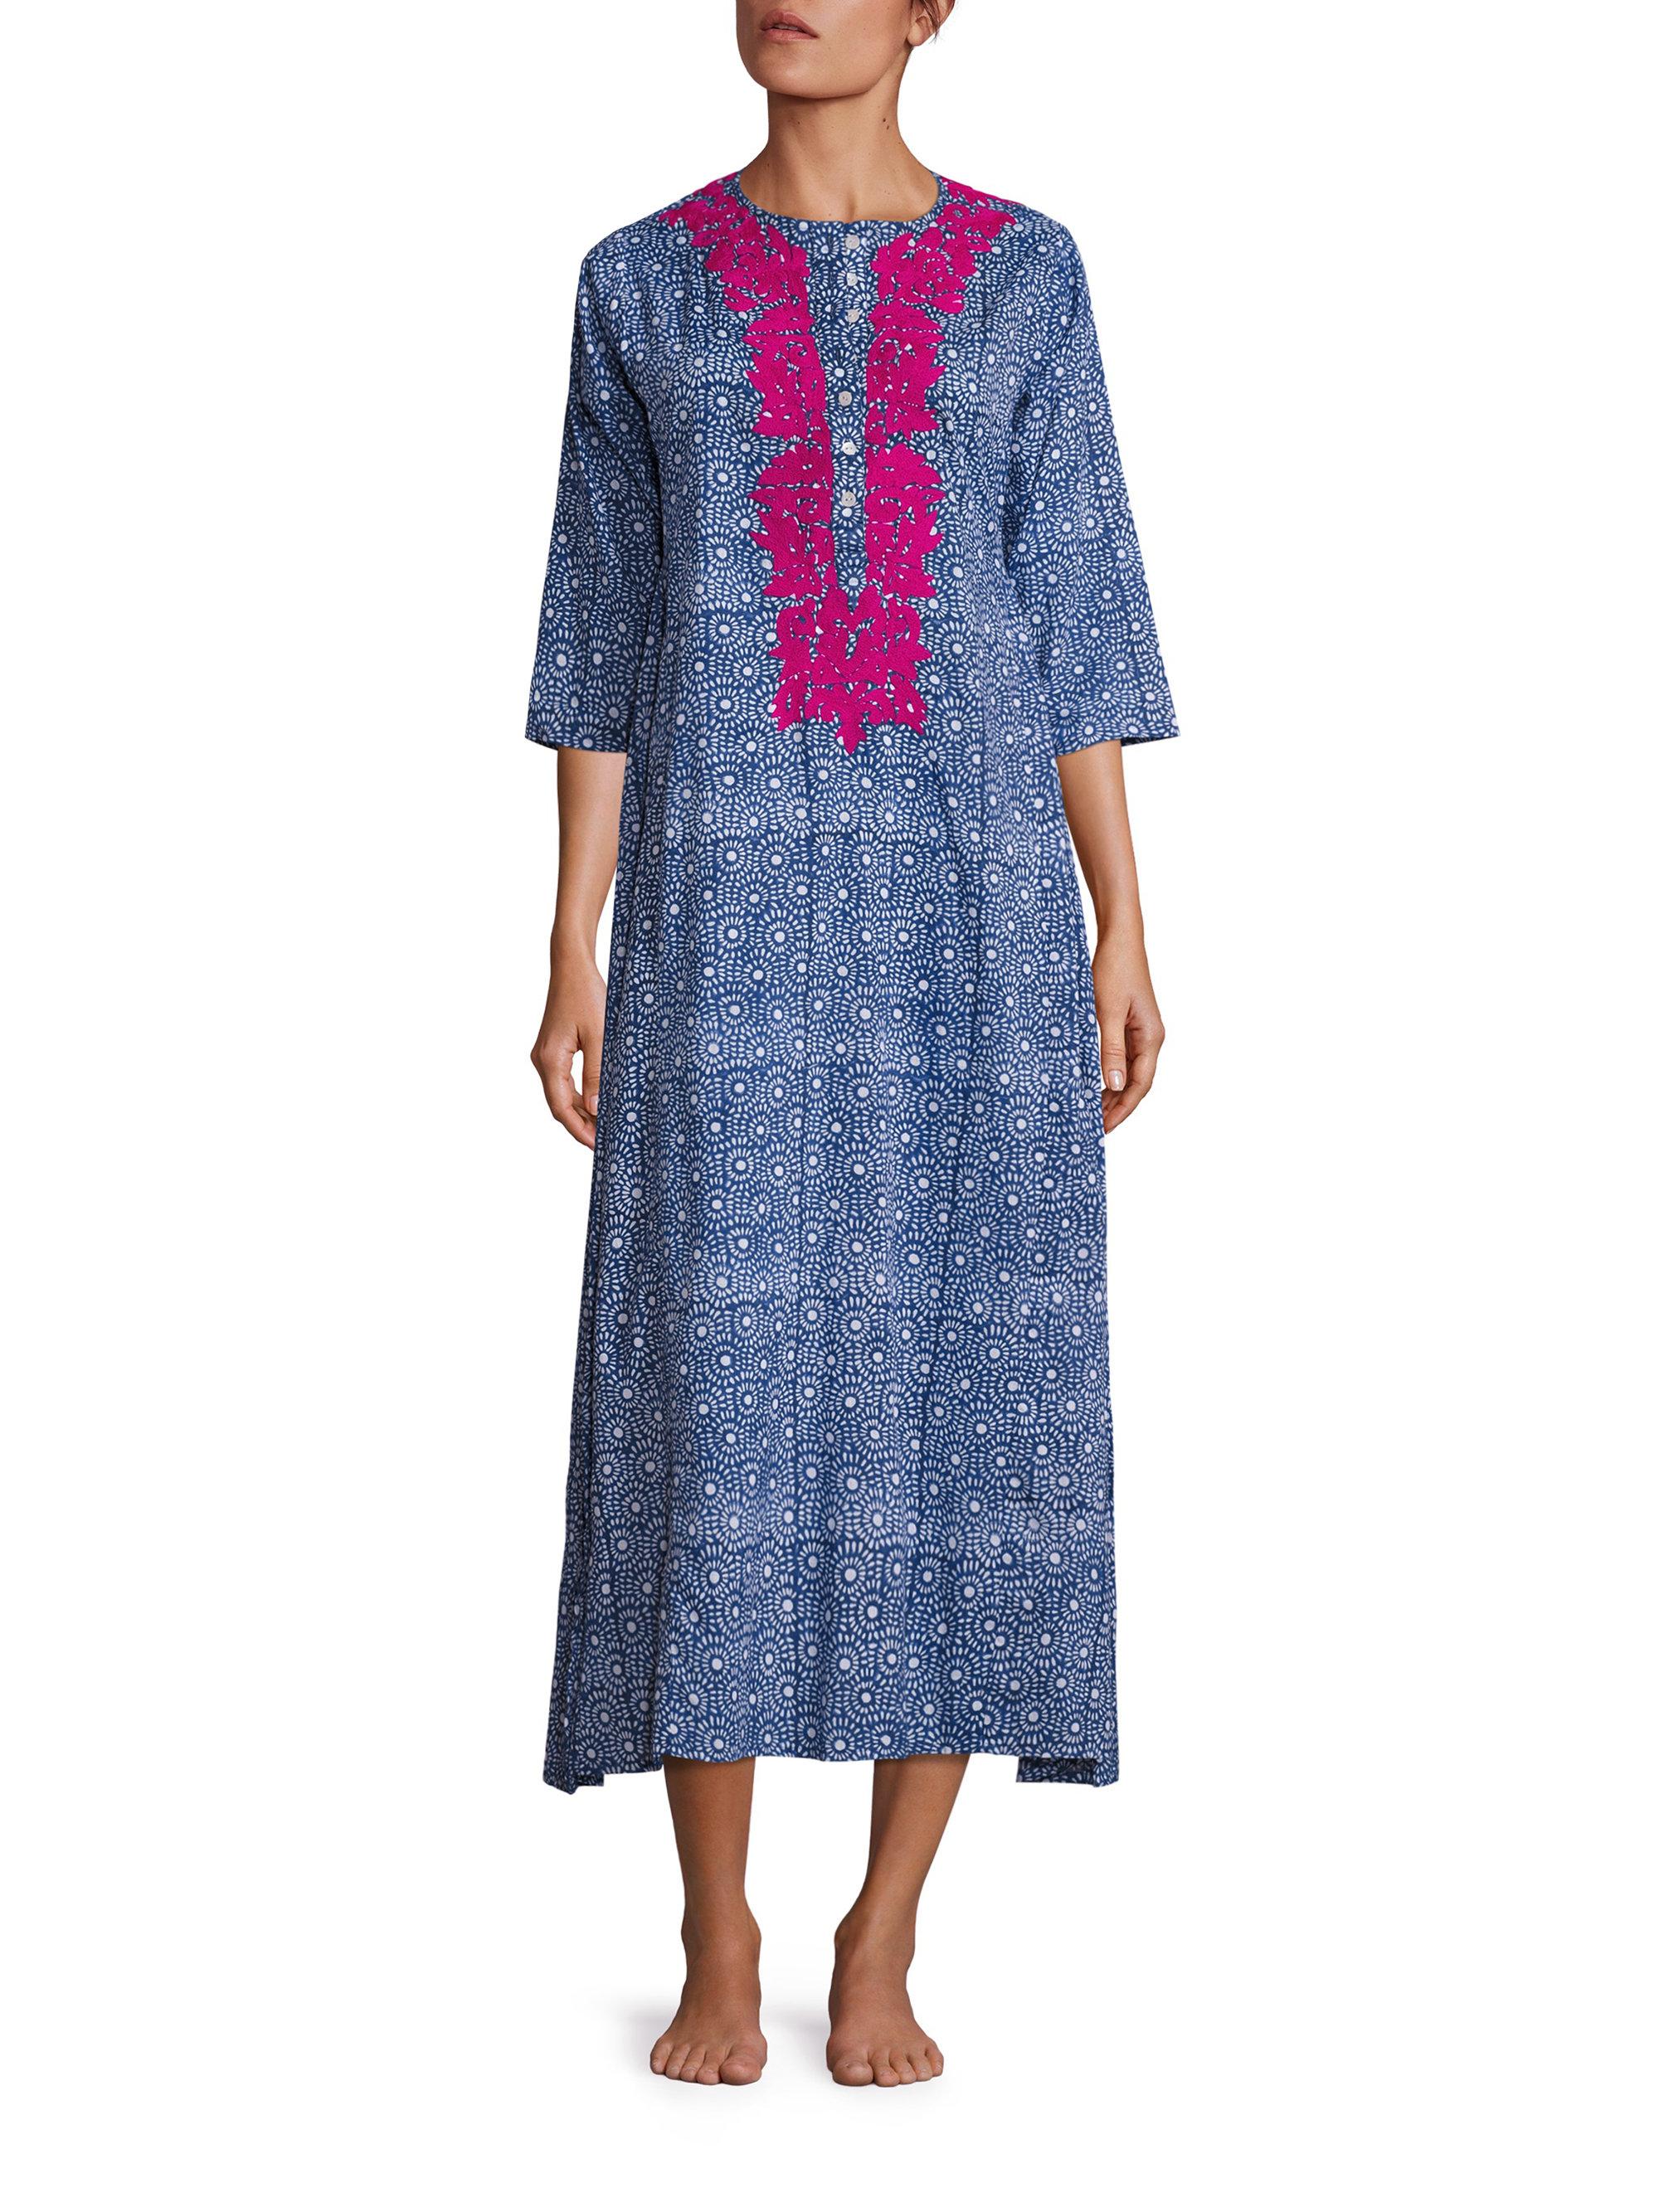 Lyst - Roberta Roller Rabbit Naolin Inez Embroidered Long Dress in Blue